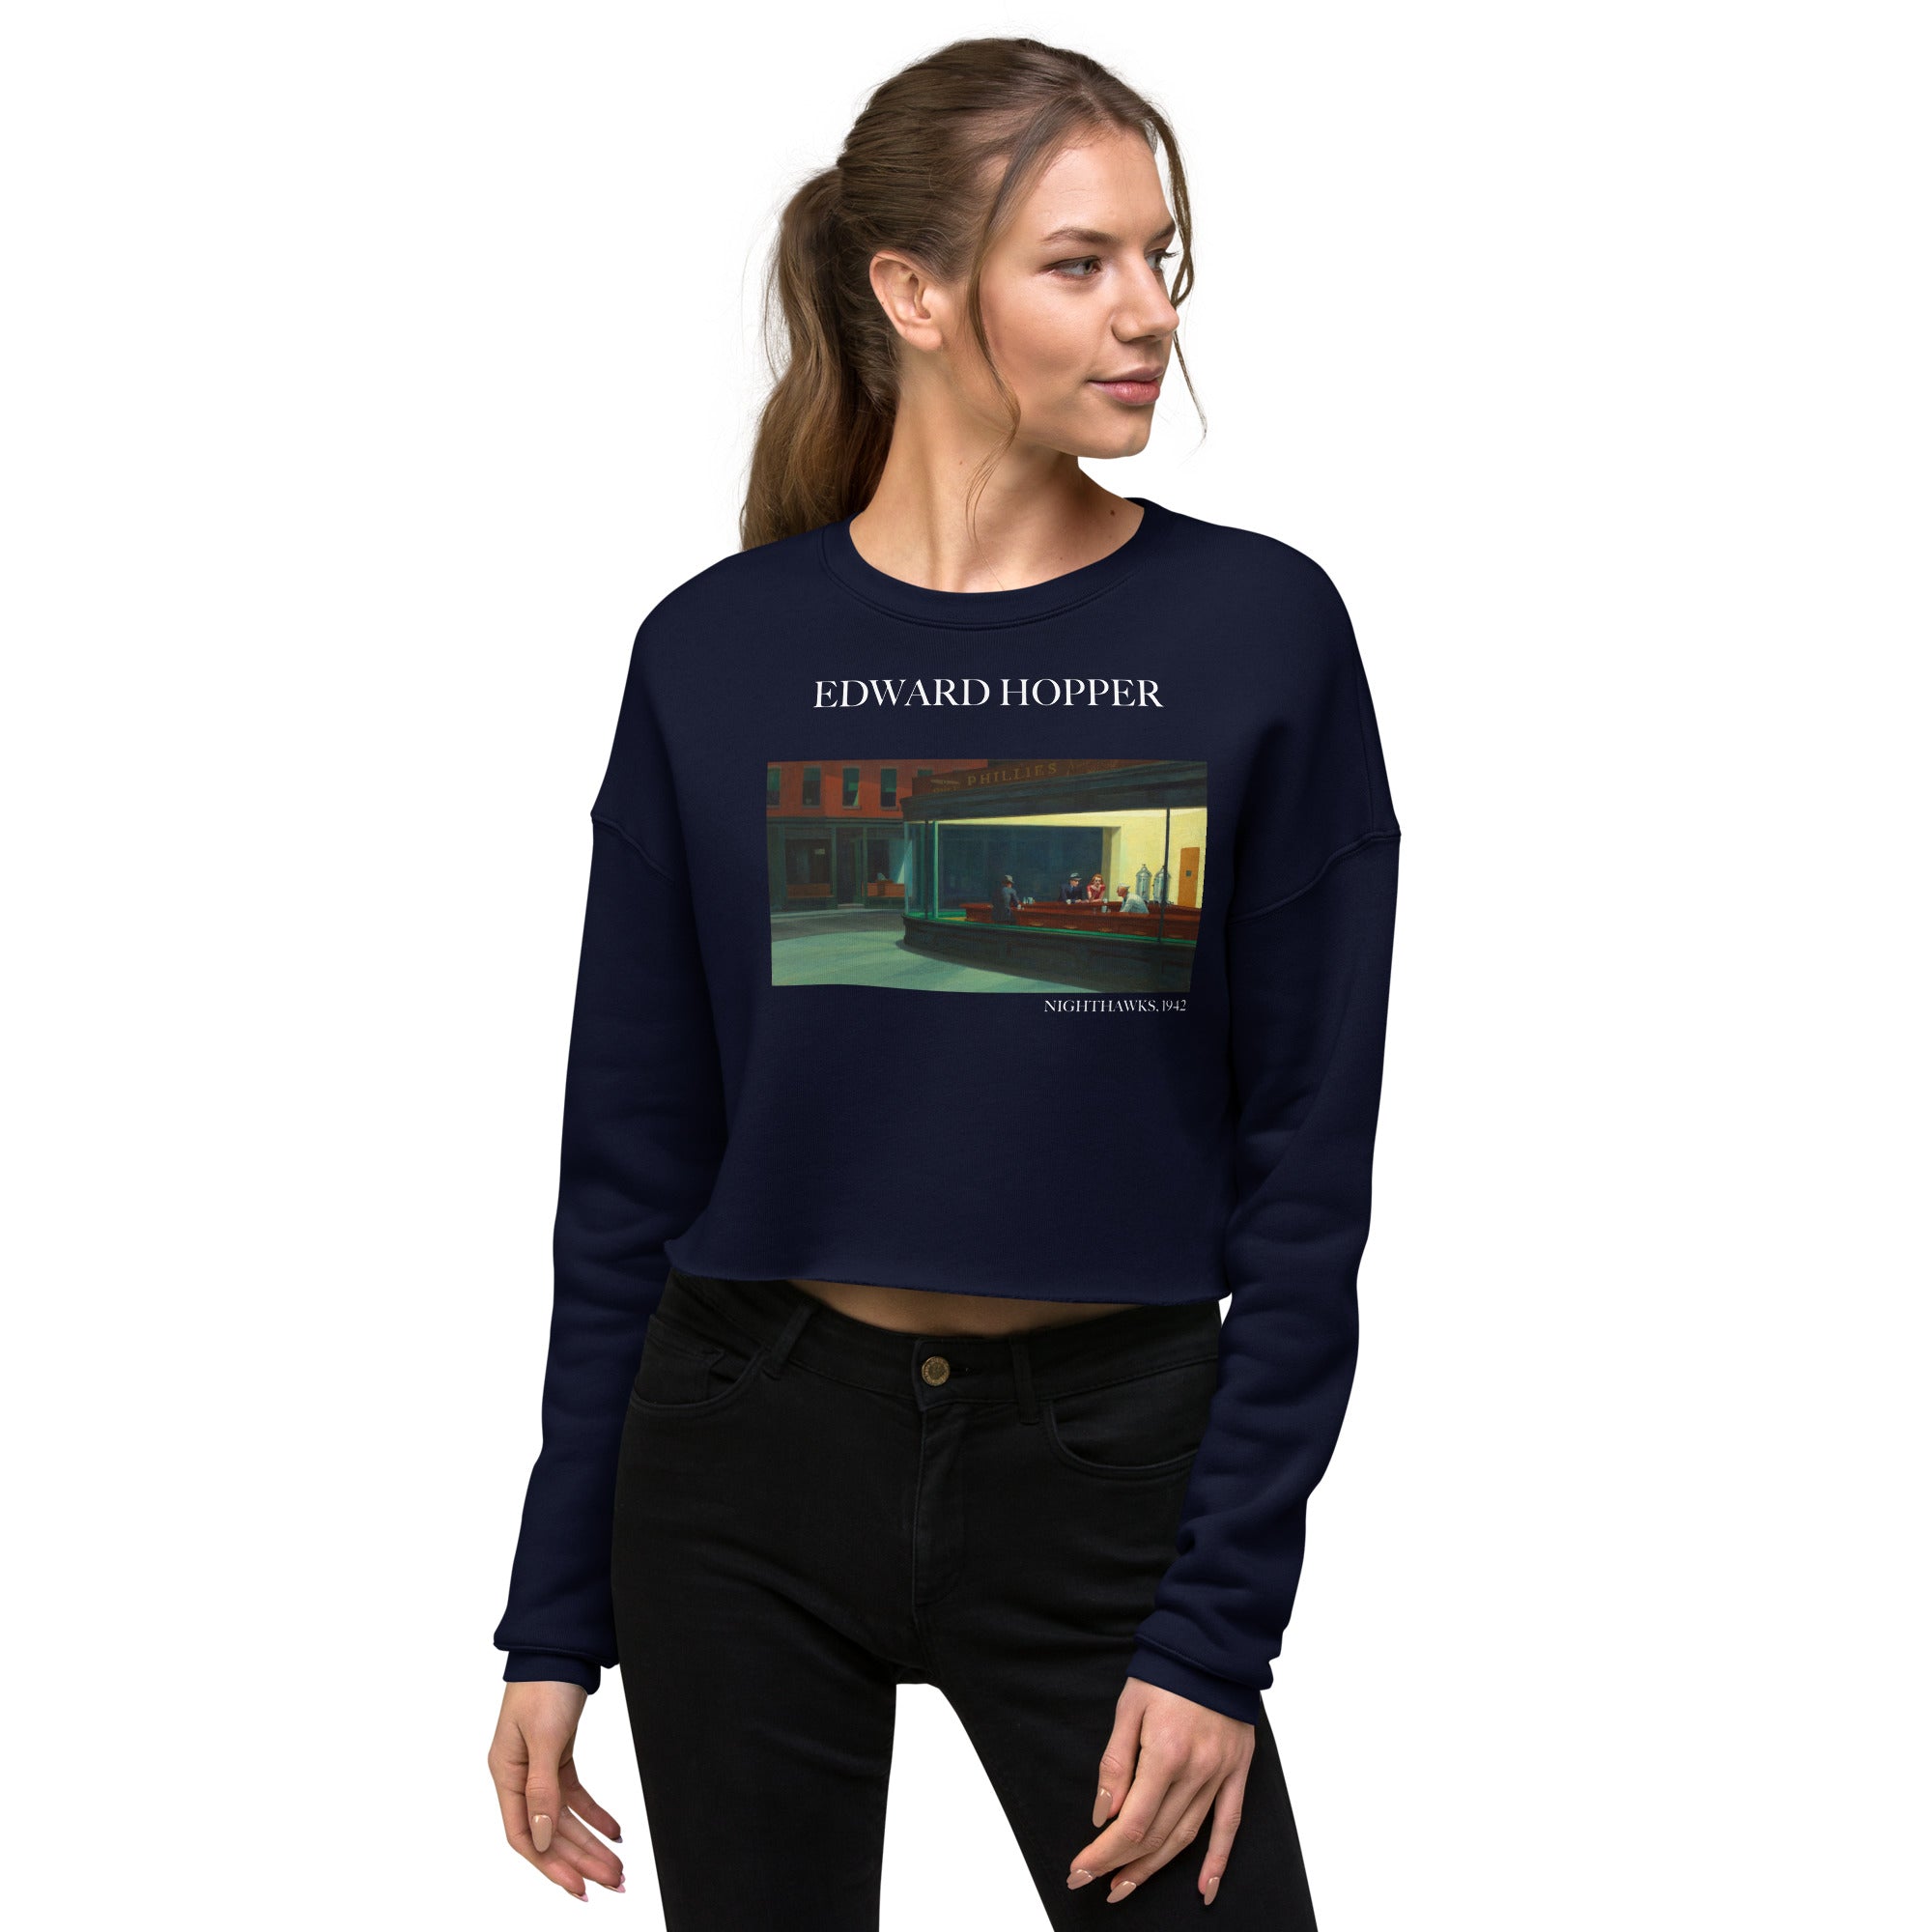 Edward Hopper 'Nighthawks' Famous Painting Cropped Sweatshirt | Premium Art Cropped Sweatshirt